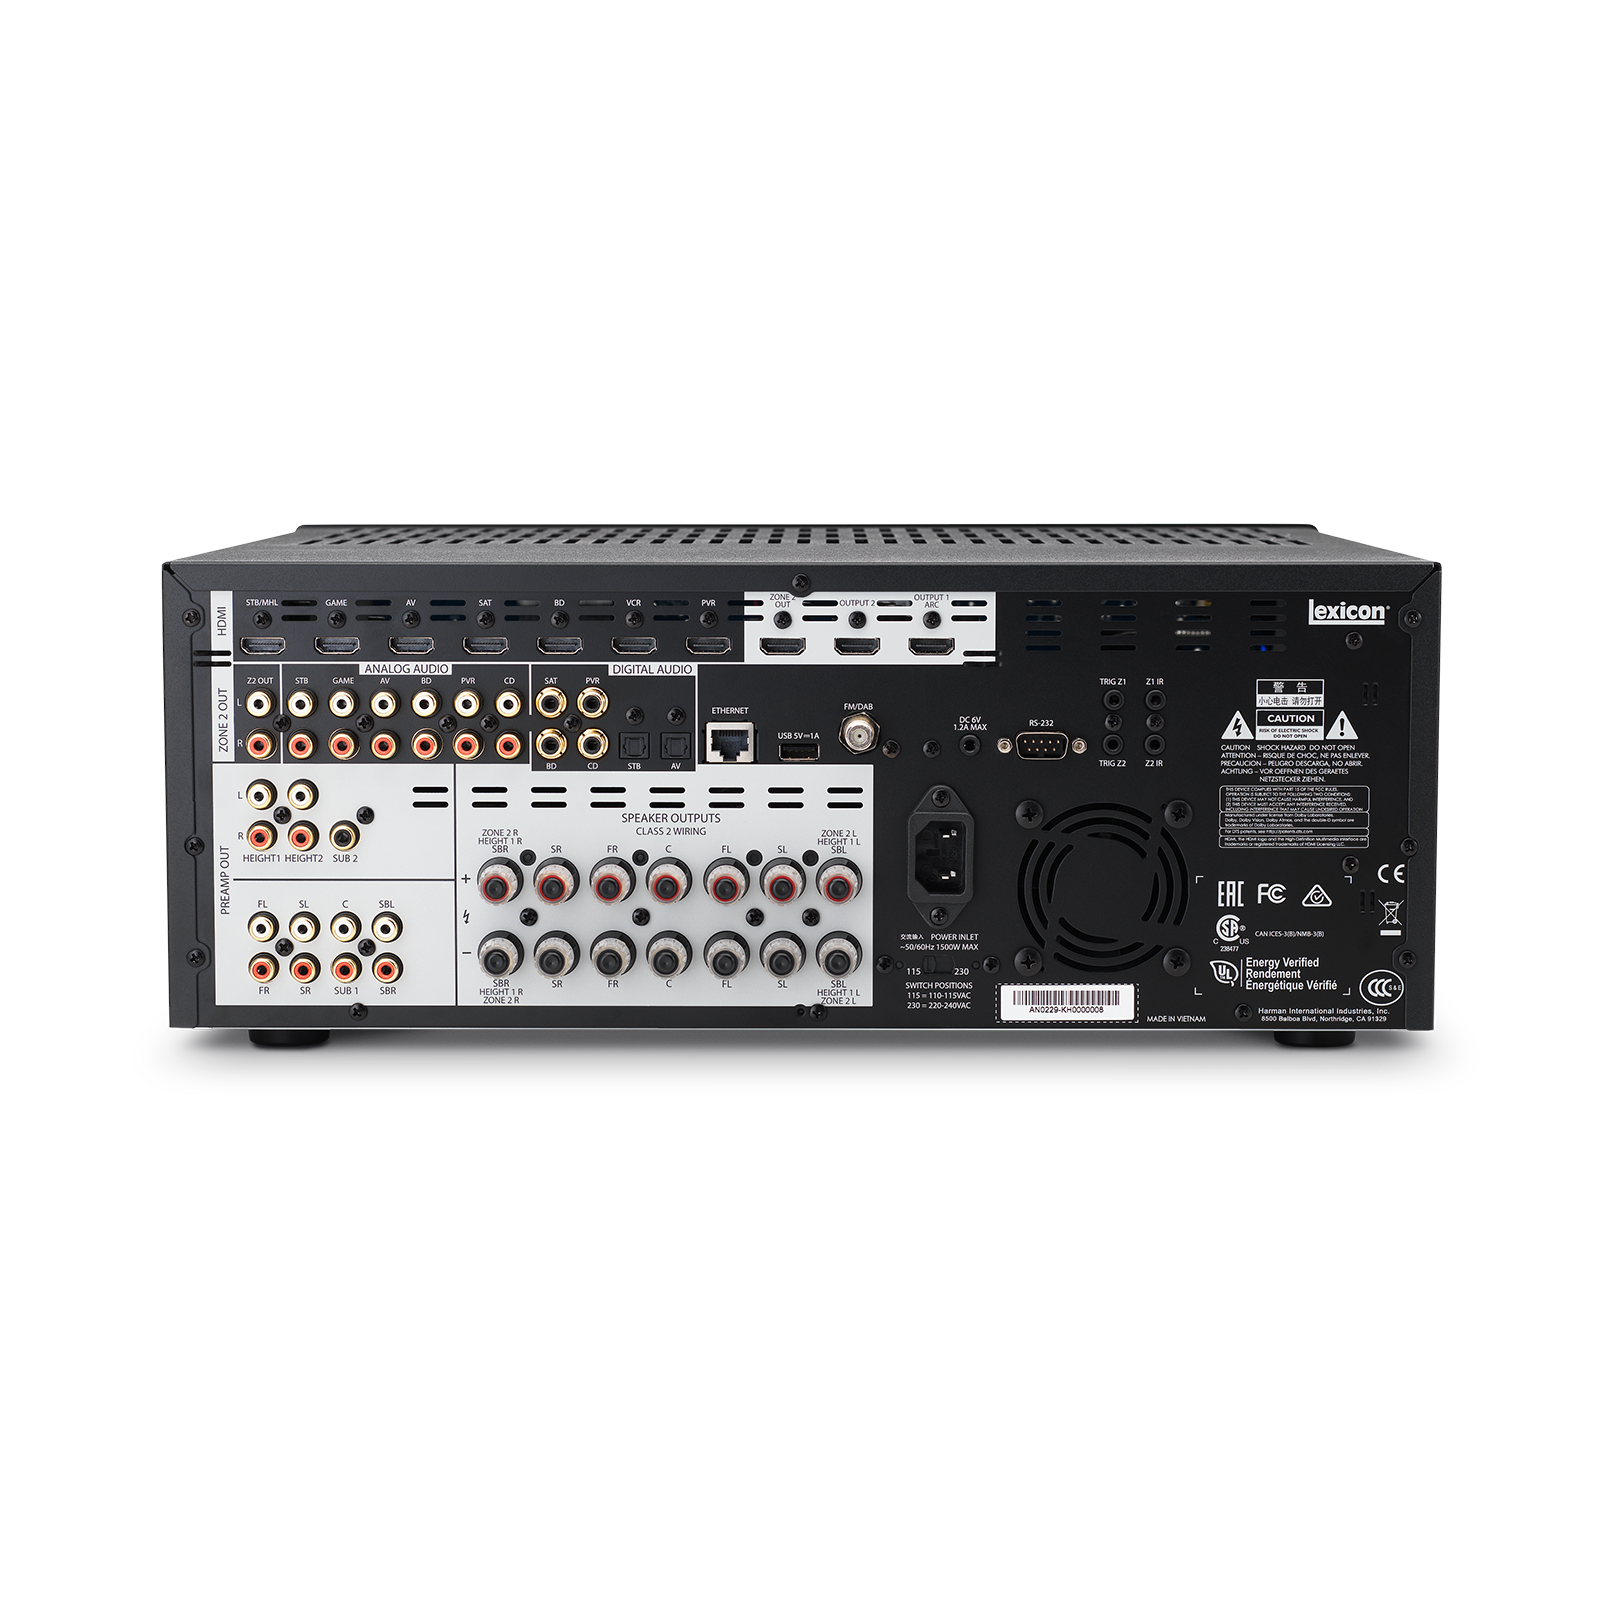 Lexicon RV - 6 Surround Sound Receiver